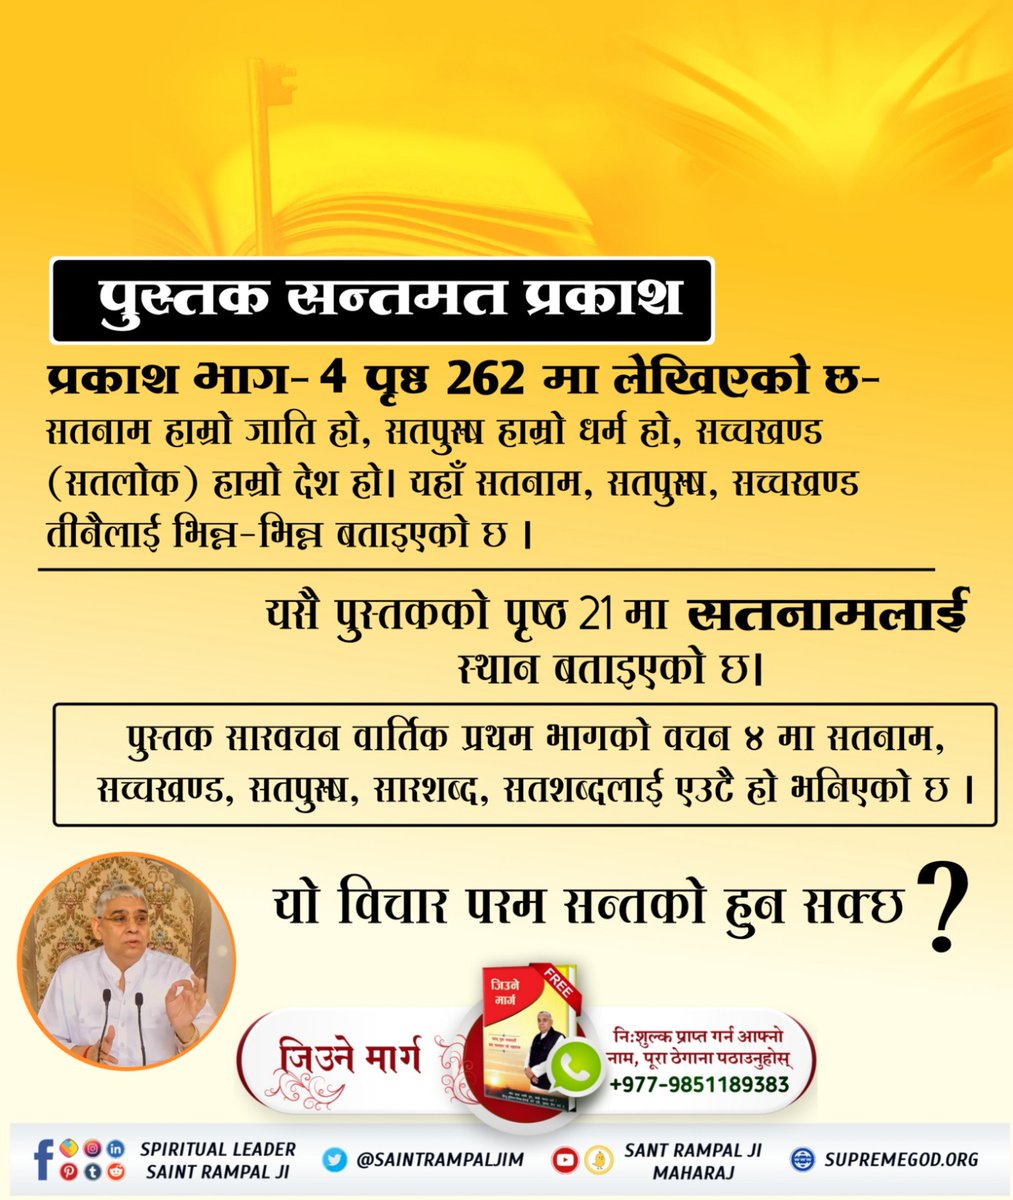 #राधास्वामी_पन्थको_सत्यता Discover the truth at supremegod.org , Sant Rampal Ji Maharaj is the true Guru, leading to salvation.